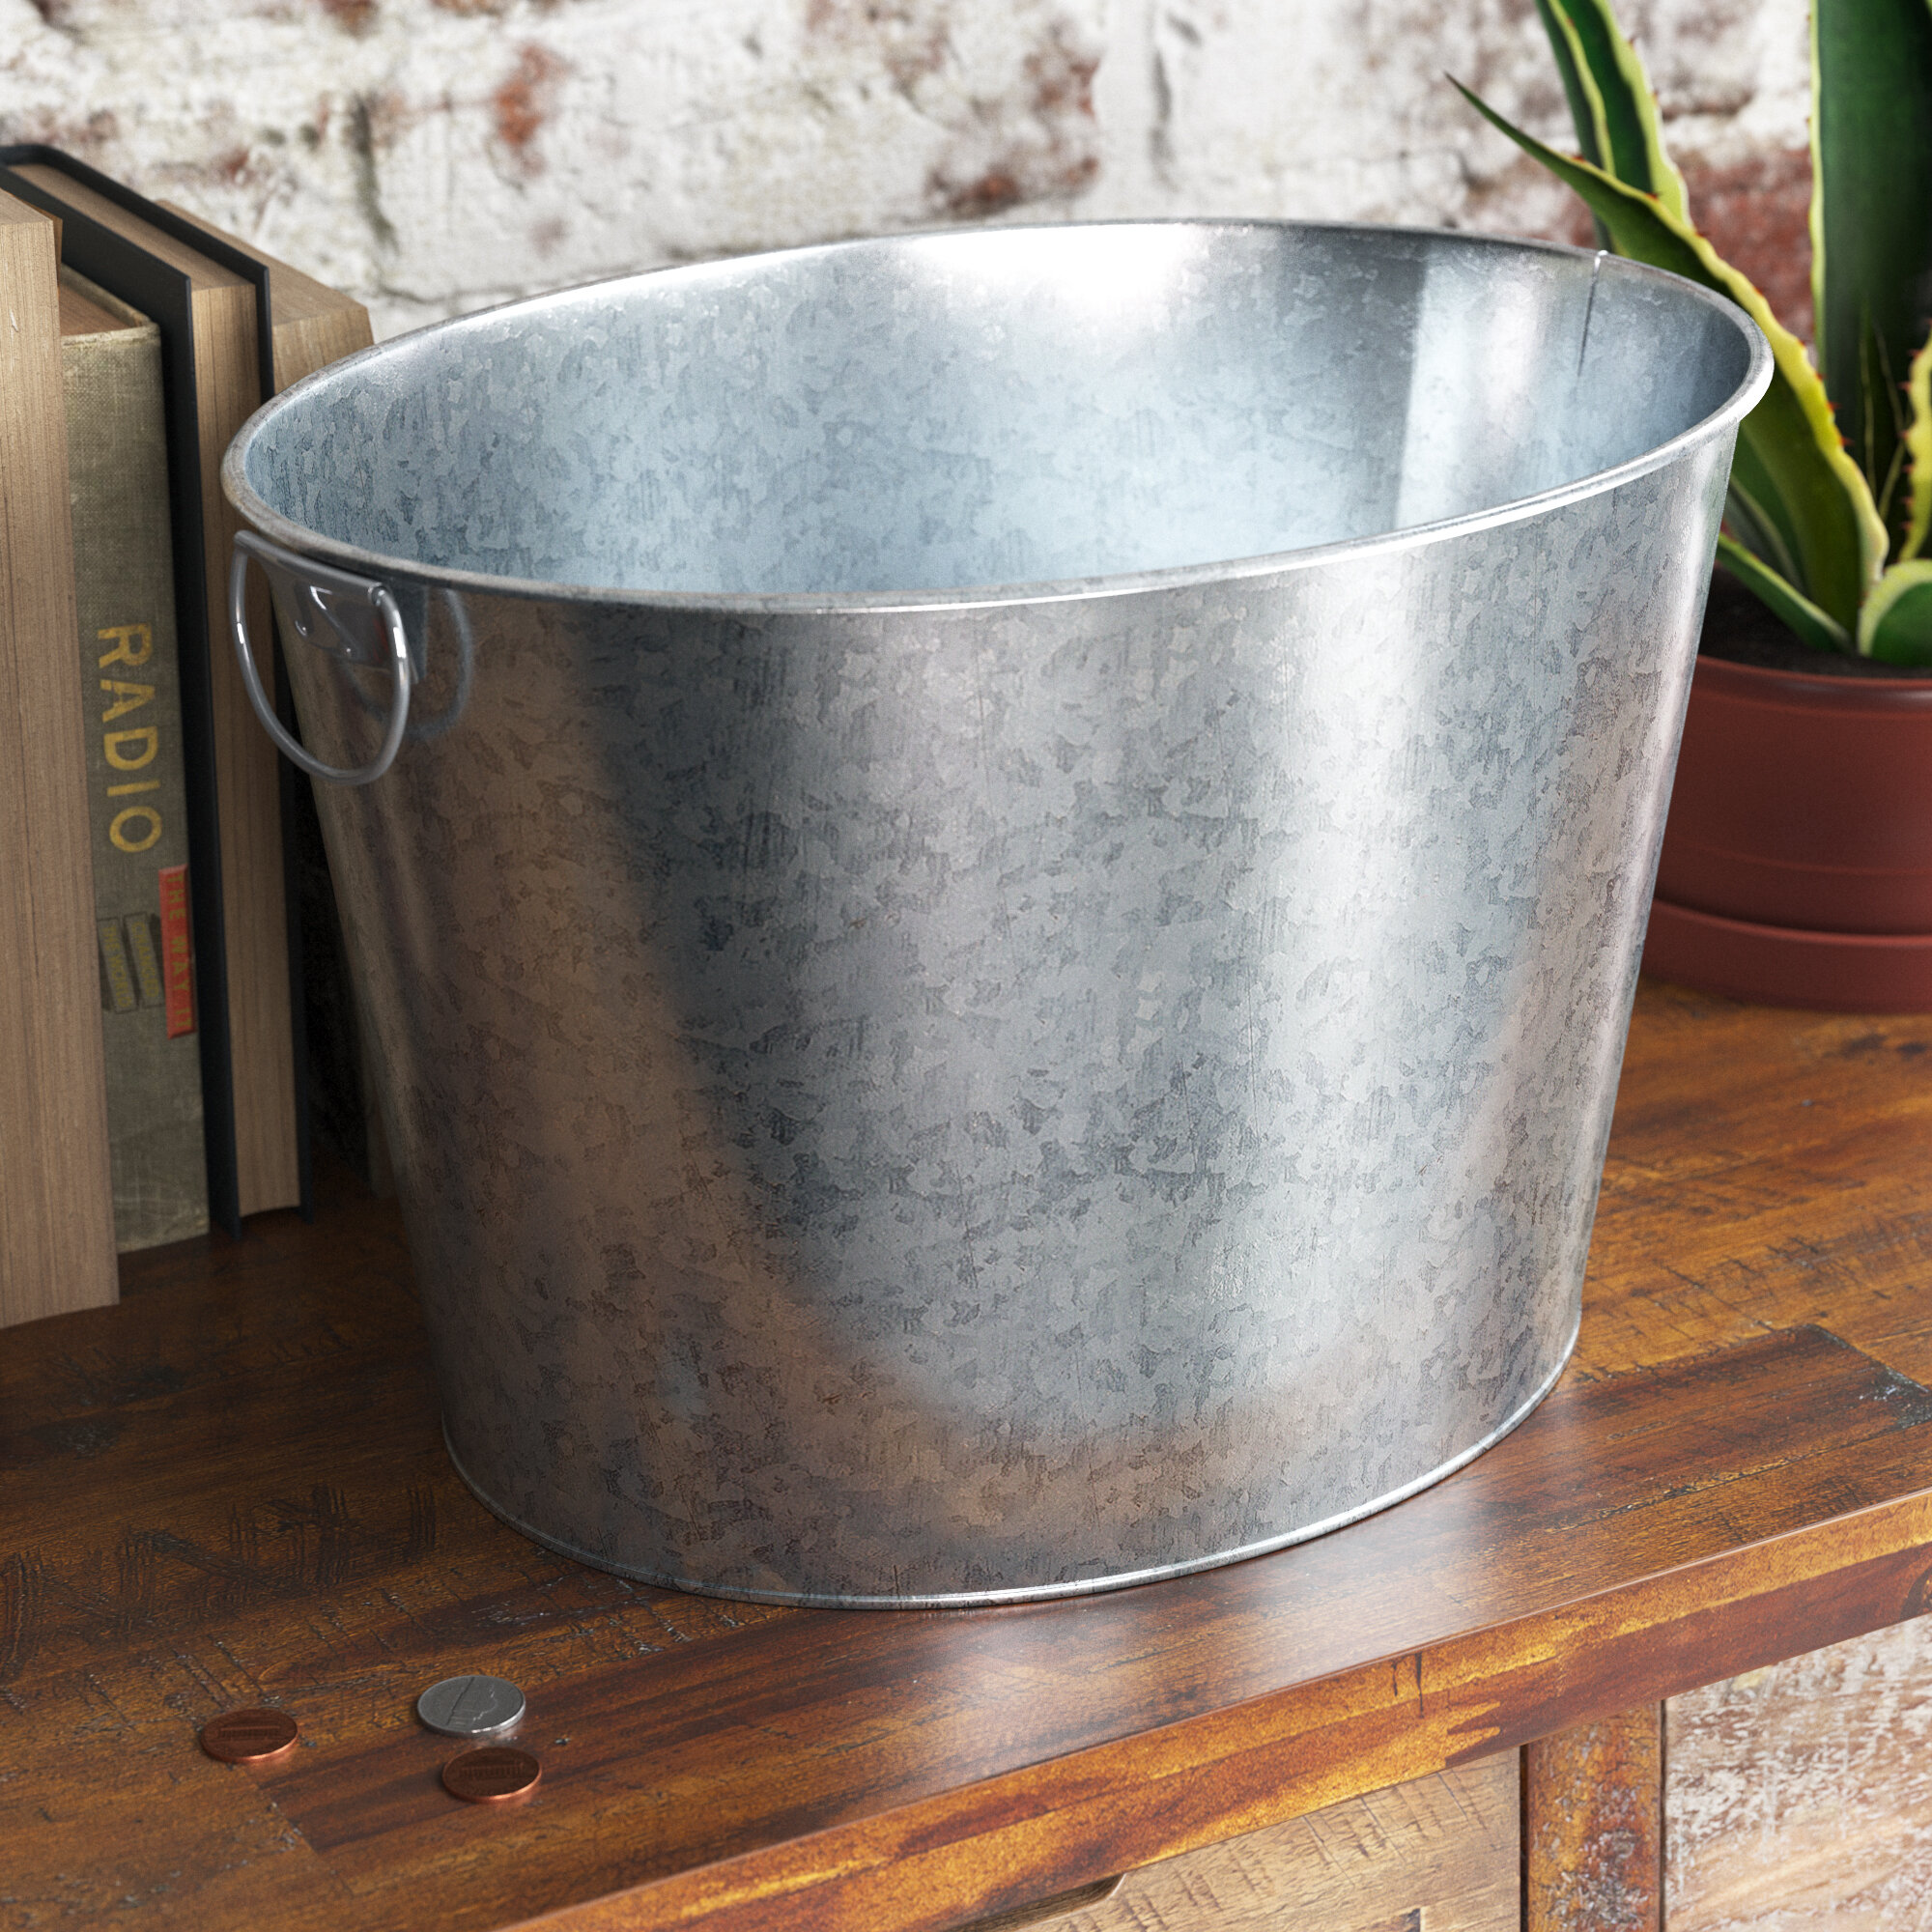 Small Galvanized Metal Oval Bucket with Wood Handle